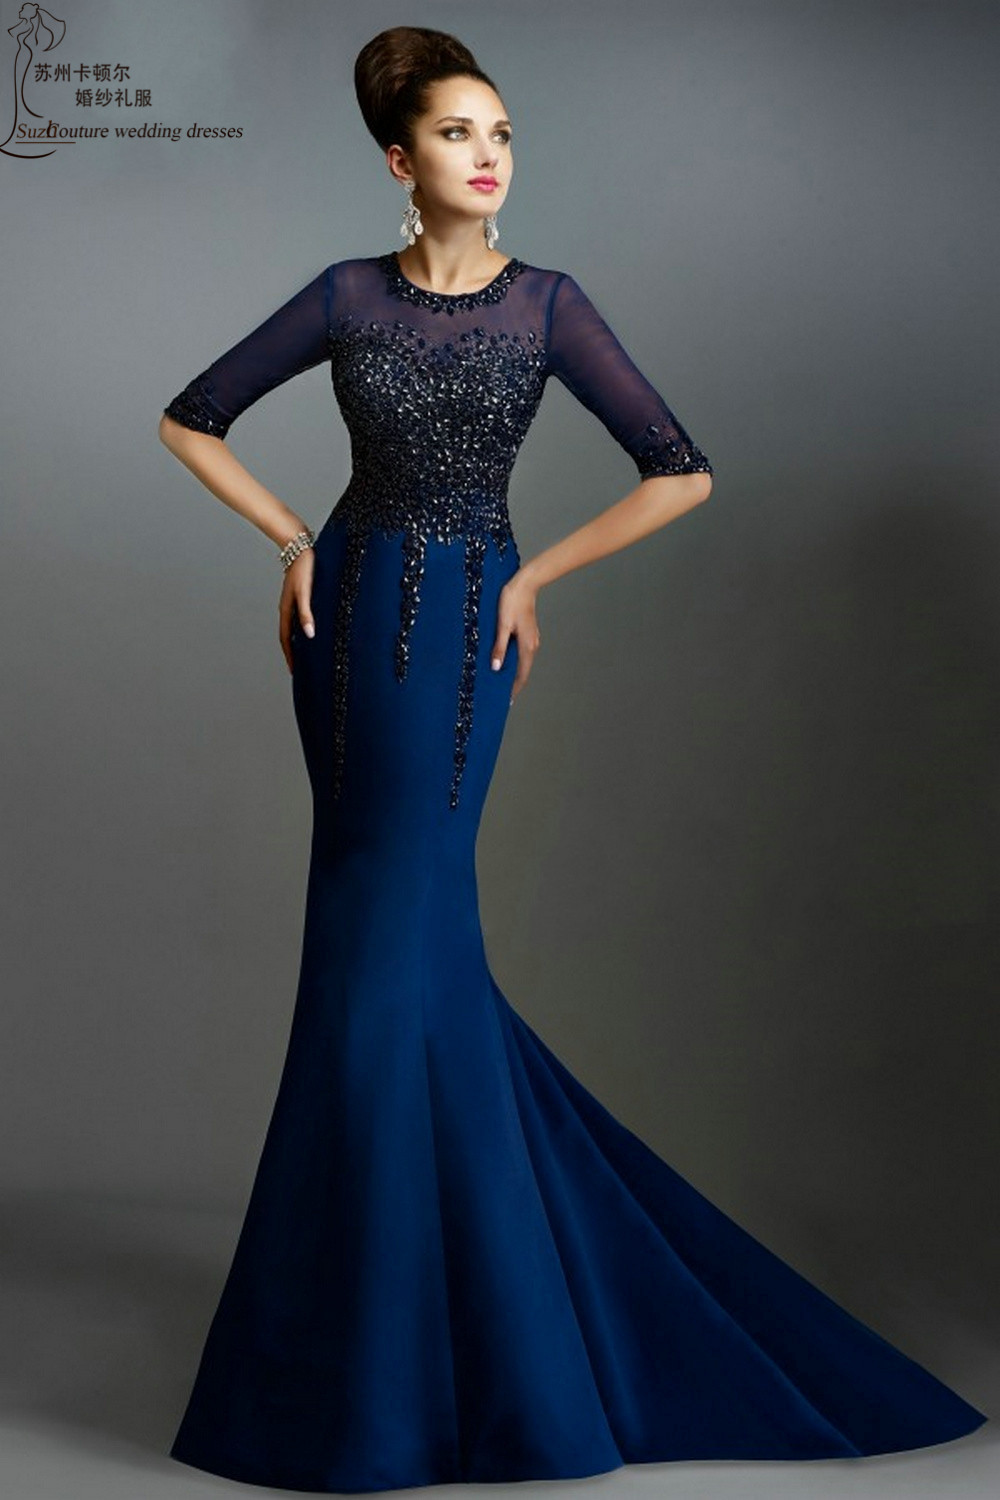 gala dresses for women - Dress Yp